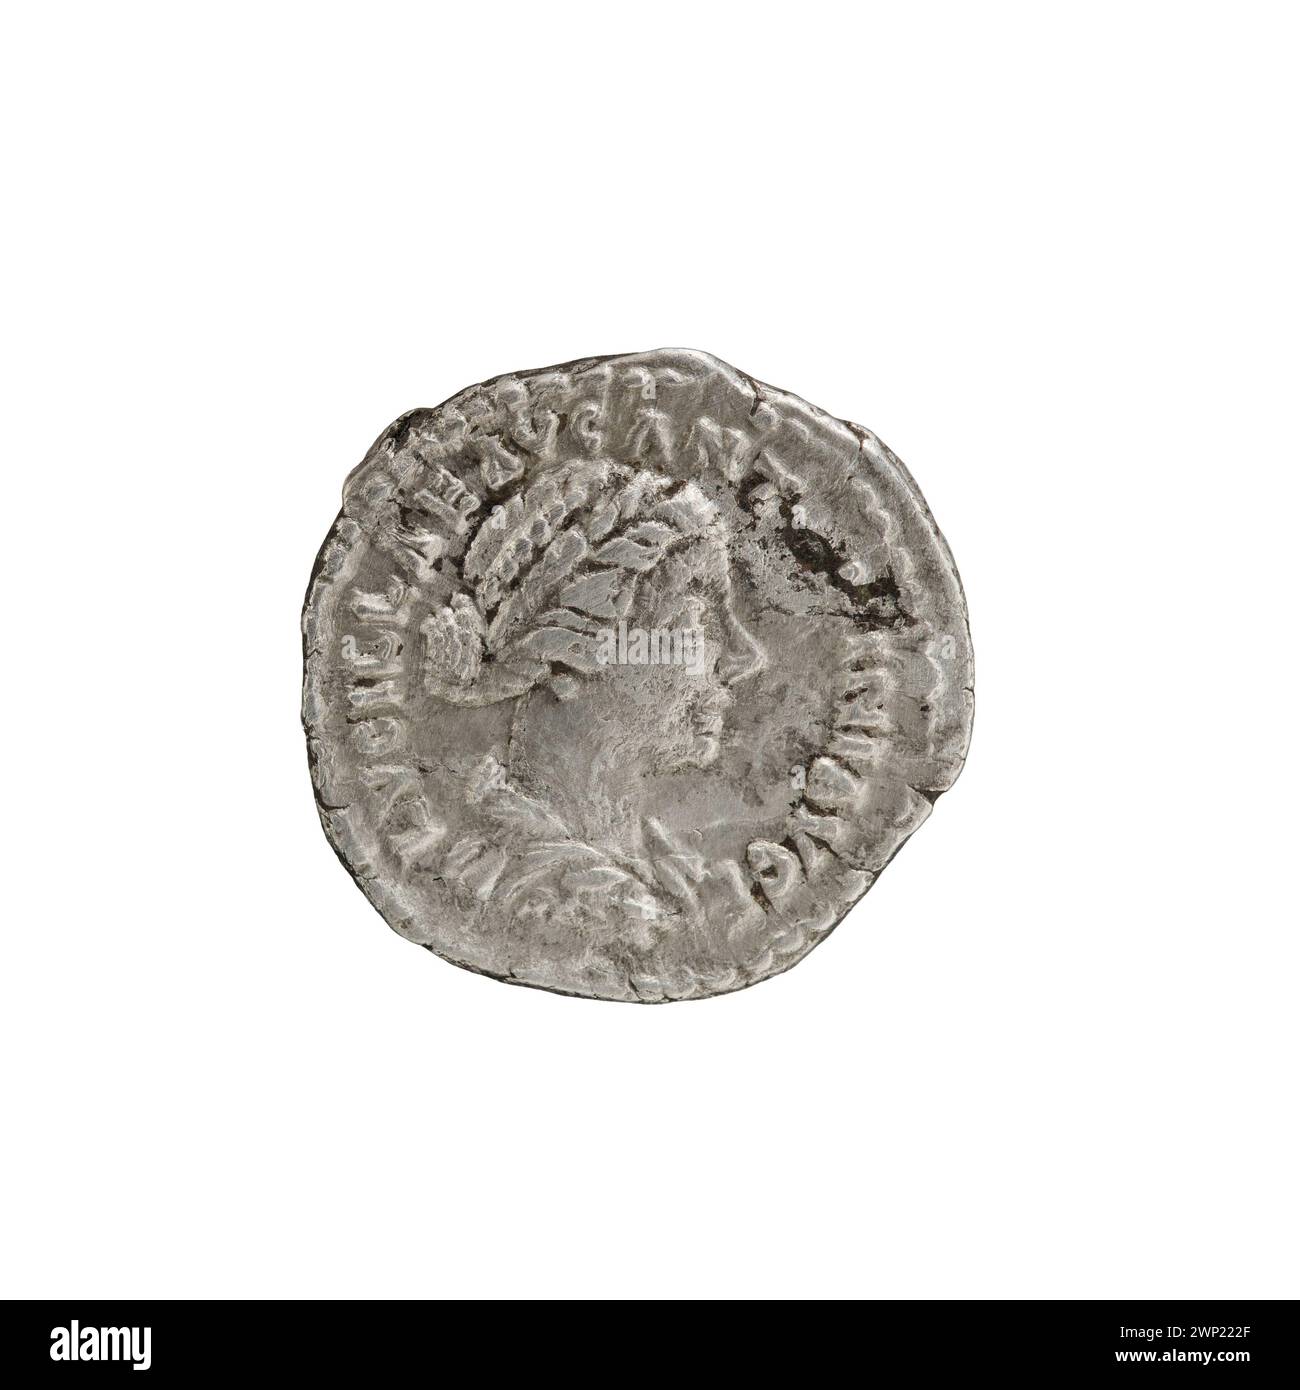 denarius; Lucius Werus (130-169; Roman emperor 161-169), Lucylla (149-182; Roman Empress 164-169); 164-169 (164-00-00-169-00-00); Stock Photo